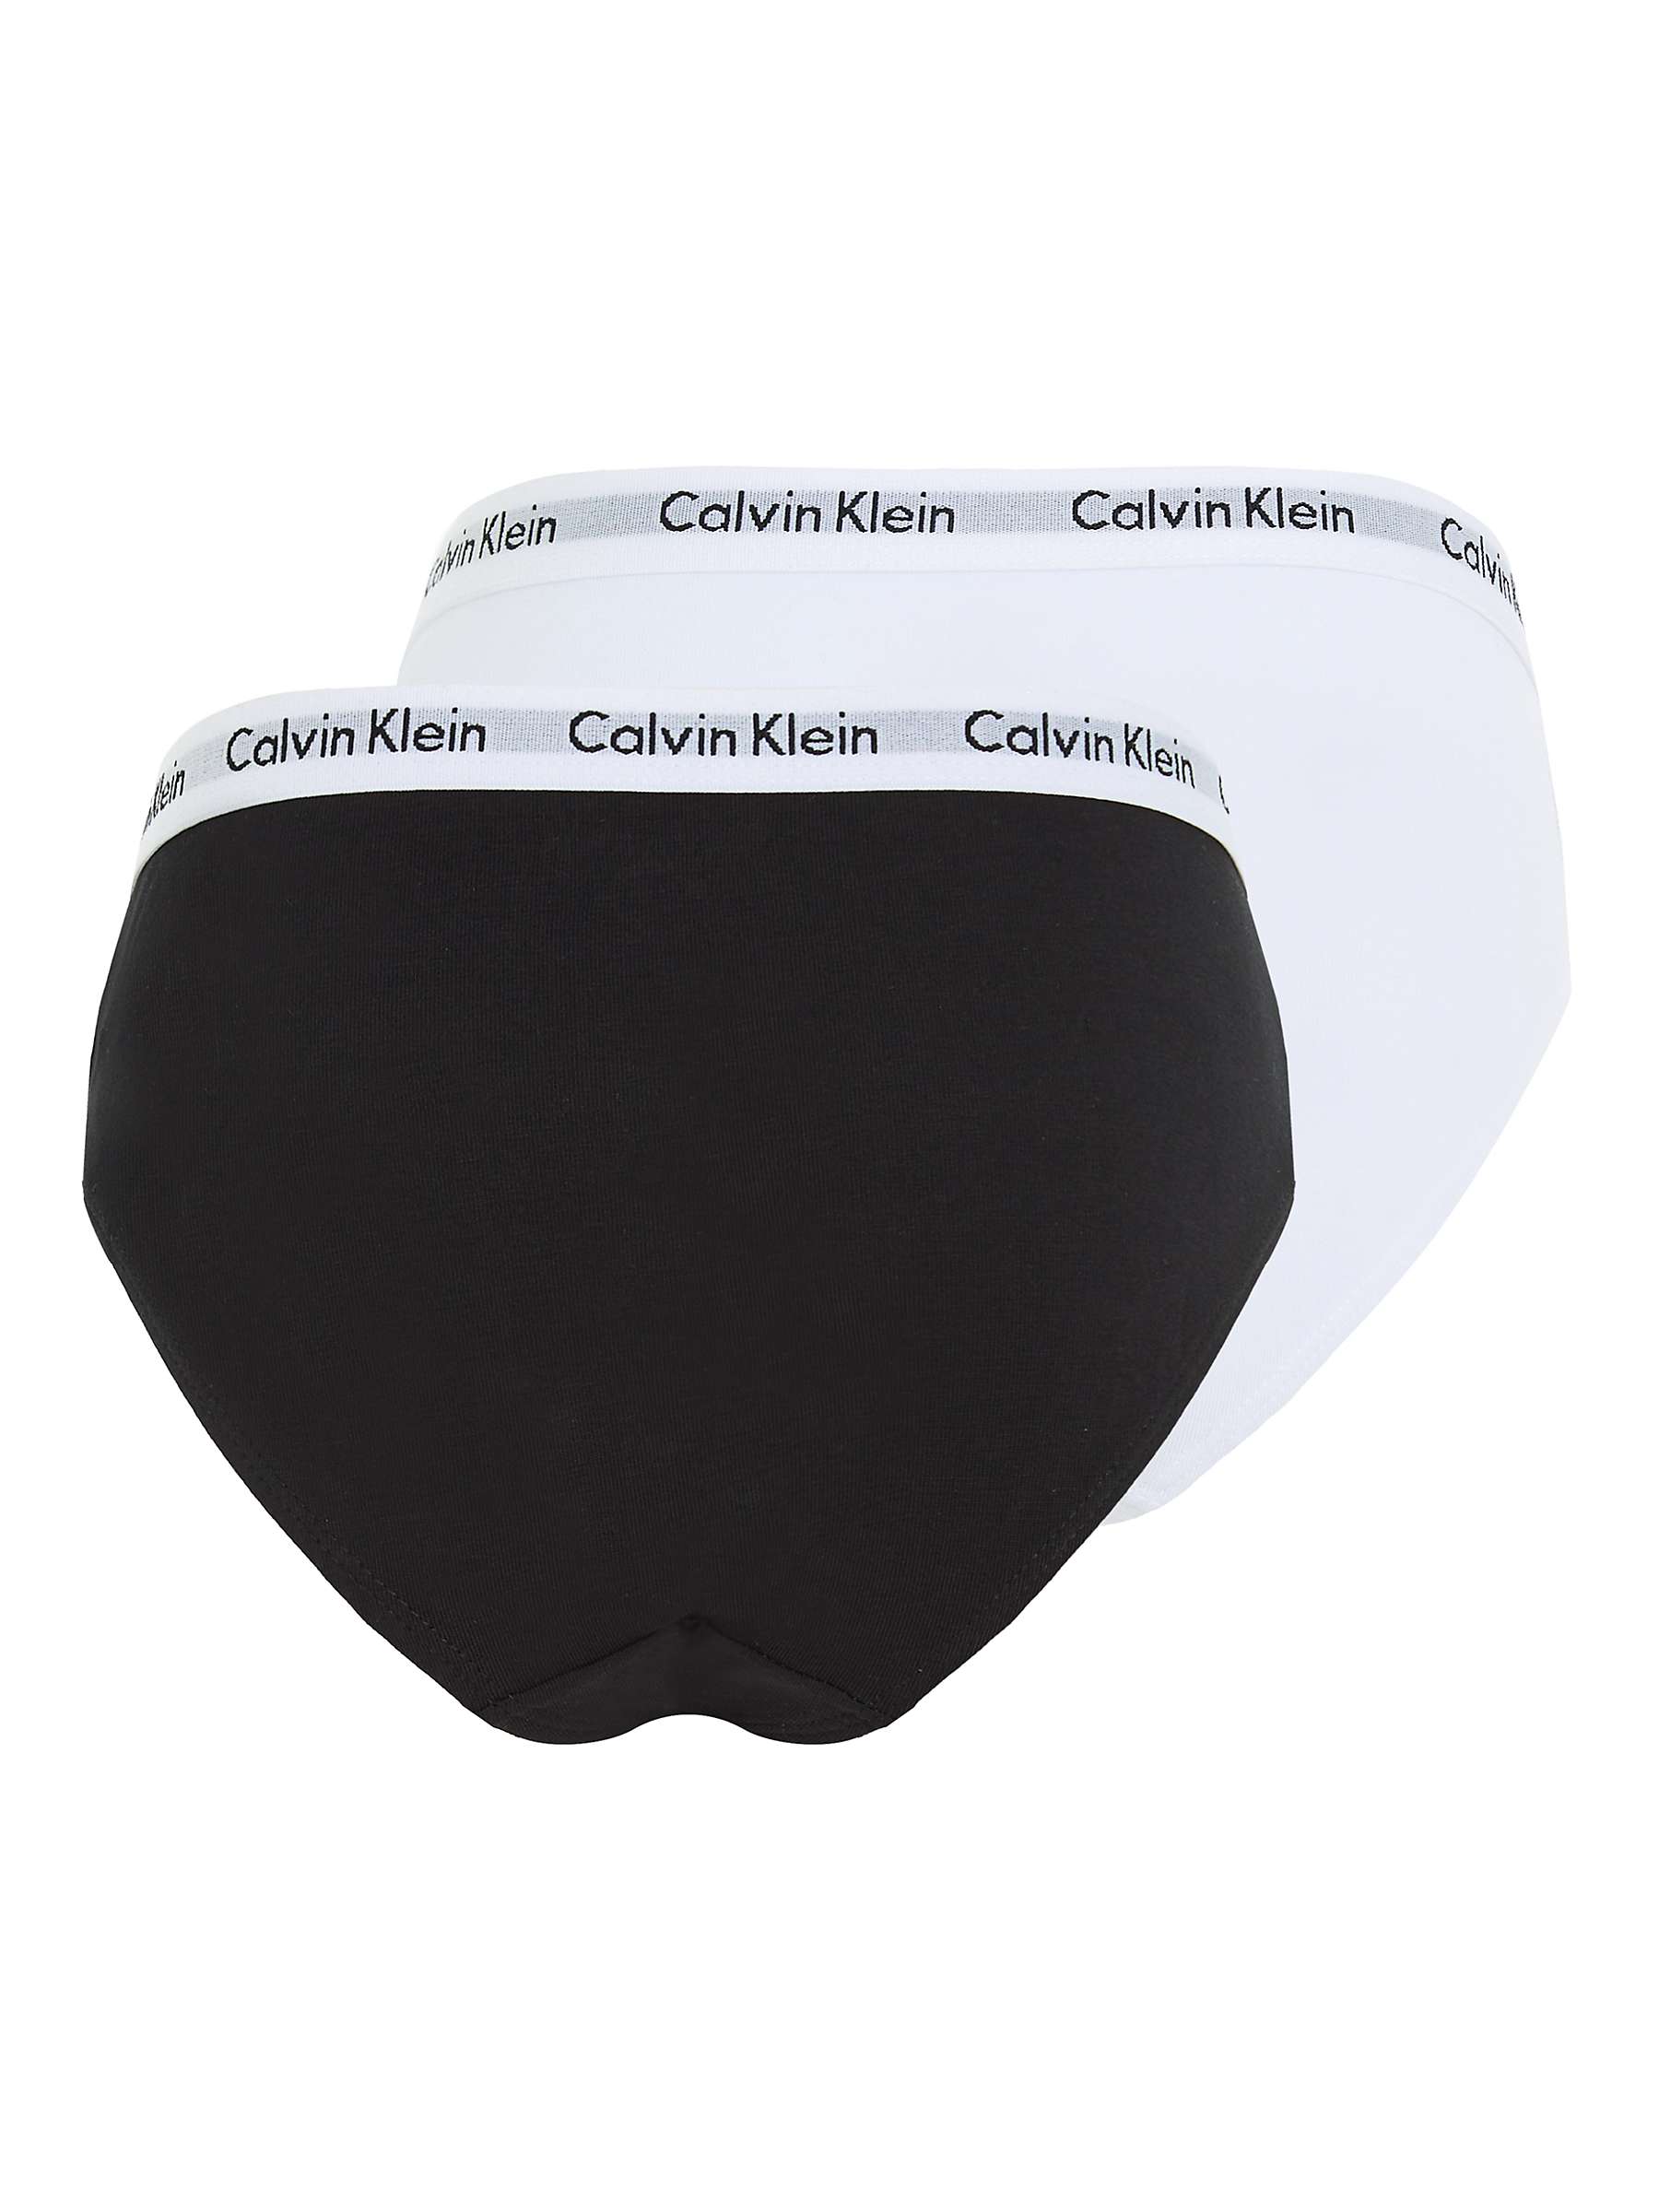 Buy Calvin Klein Kids' Bikini Briefs, Pack of 2 Online at johnlewis.com